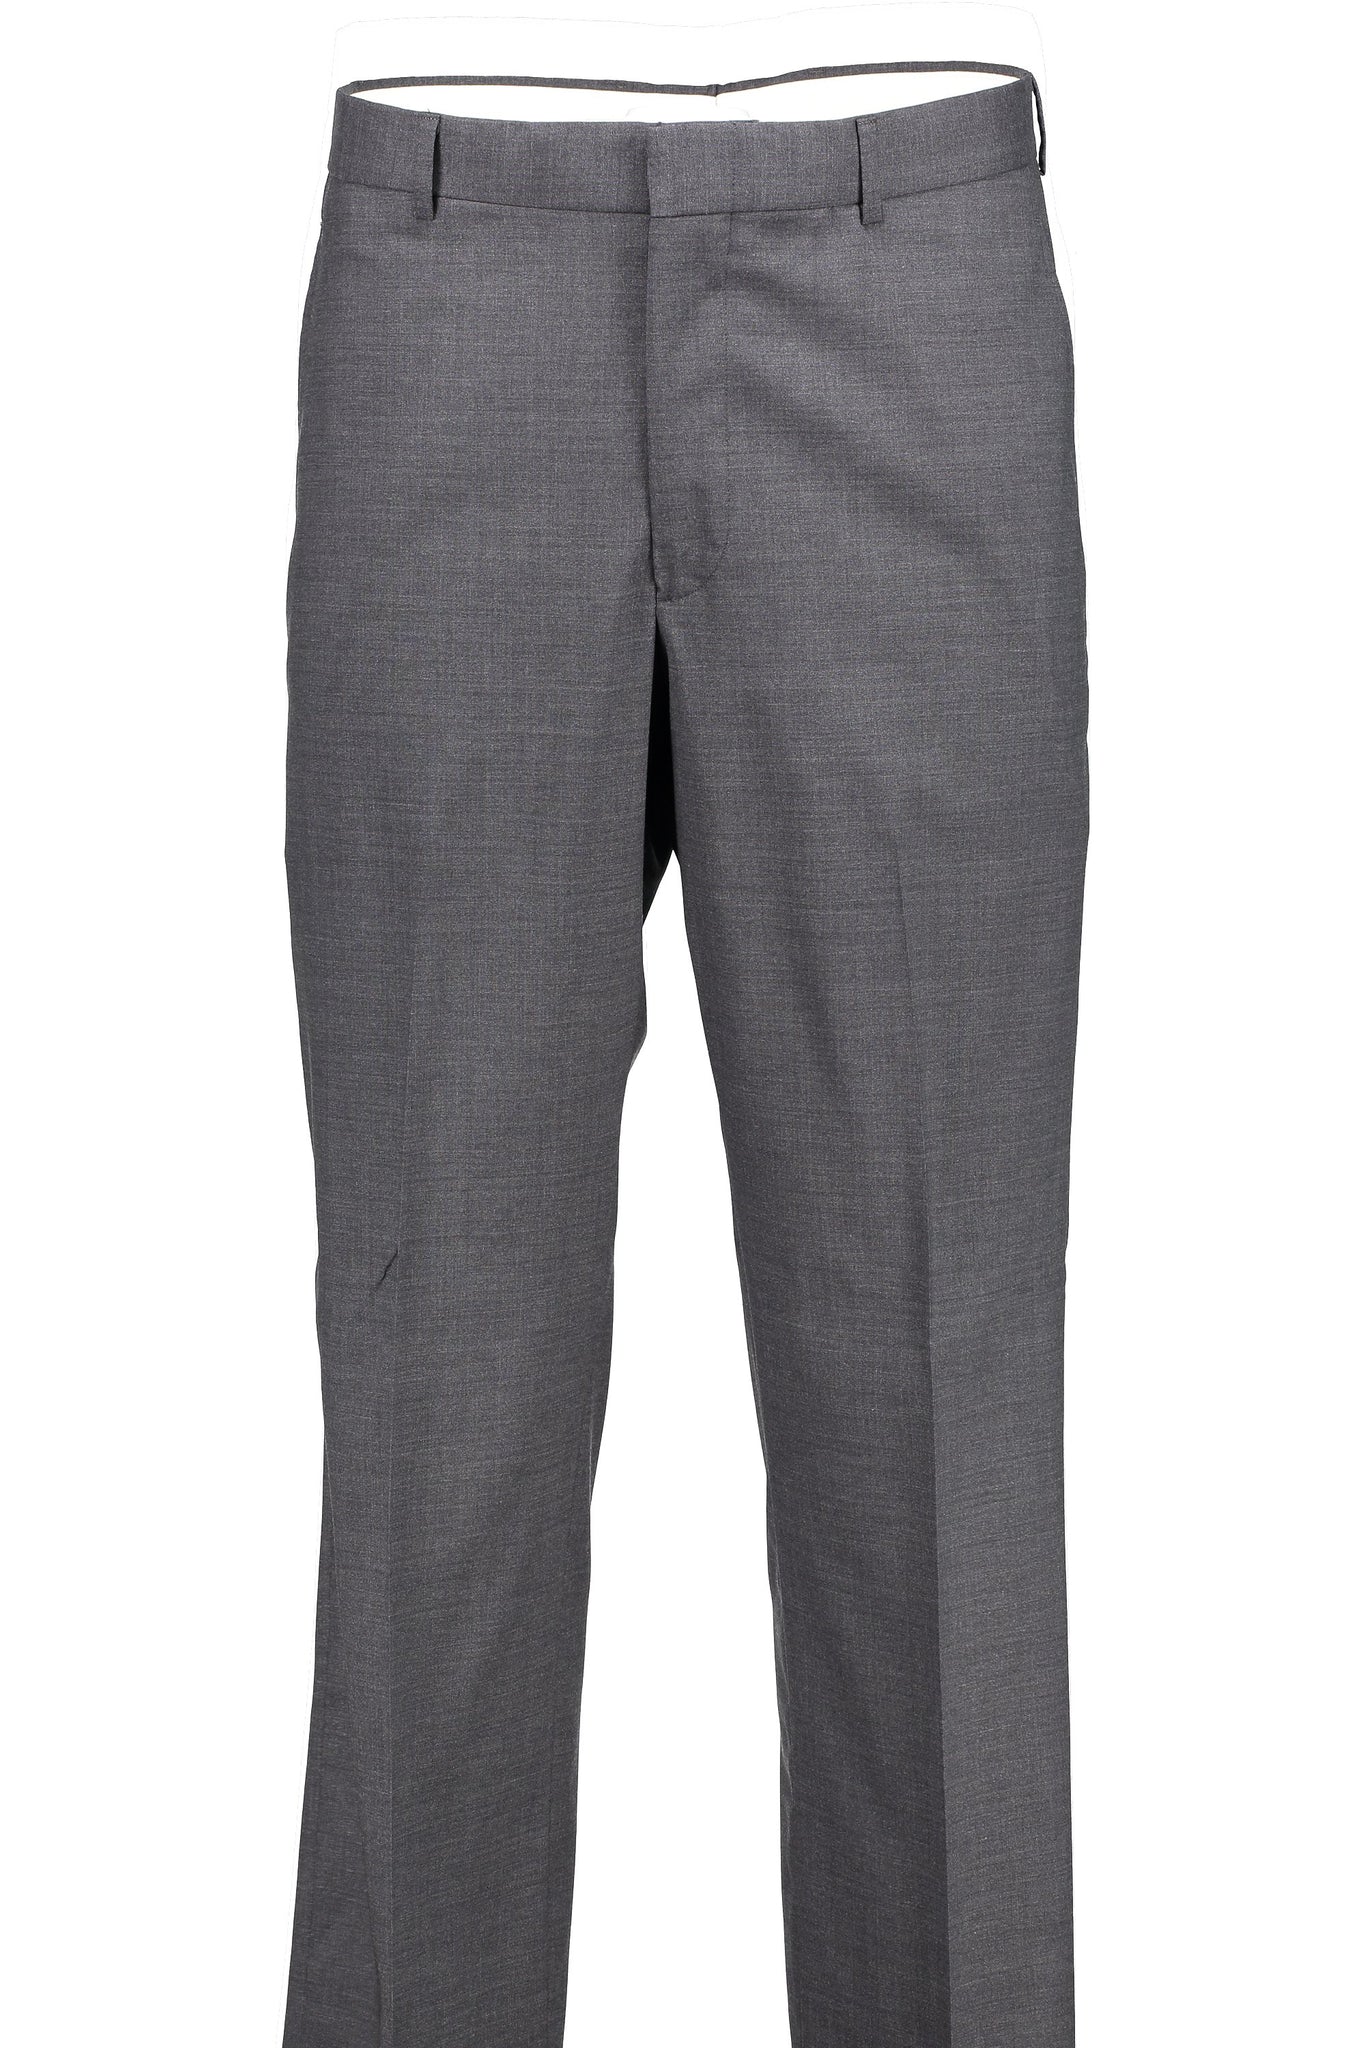 Medium Grey Slim Fit Dress Pants – Italy Direct